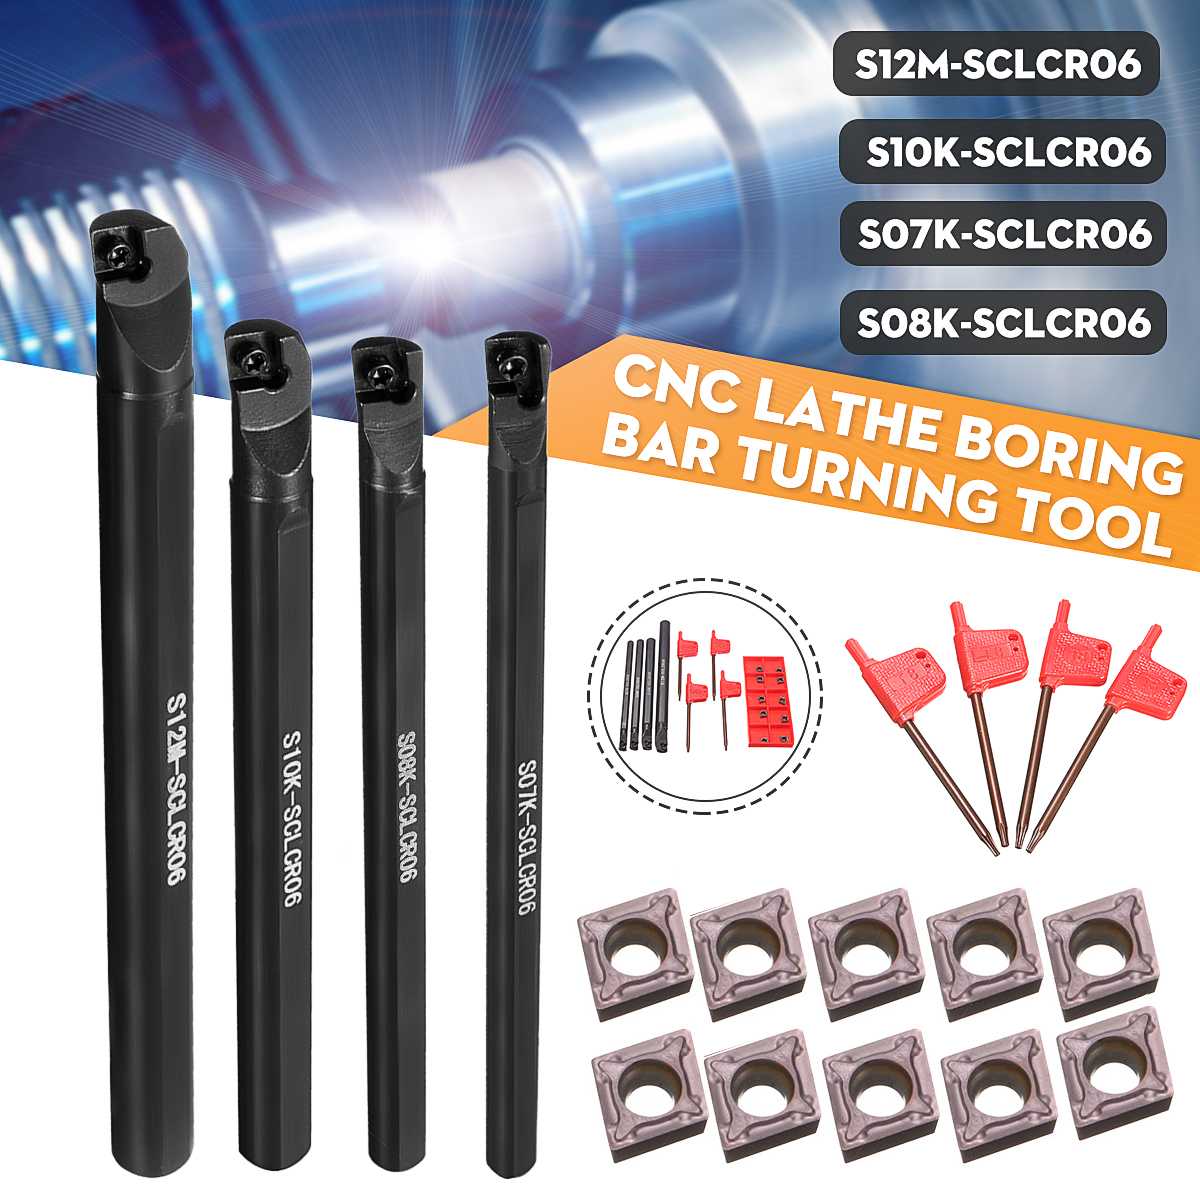 GBJ 10pcs CCMT060204-FG ZM1125 Carbide Milling Inserts for S06K/S07K/S08K/S12M-SCLCR06 CNC Lathe Turning Tool Boring Bar 